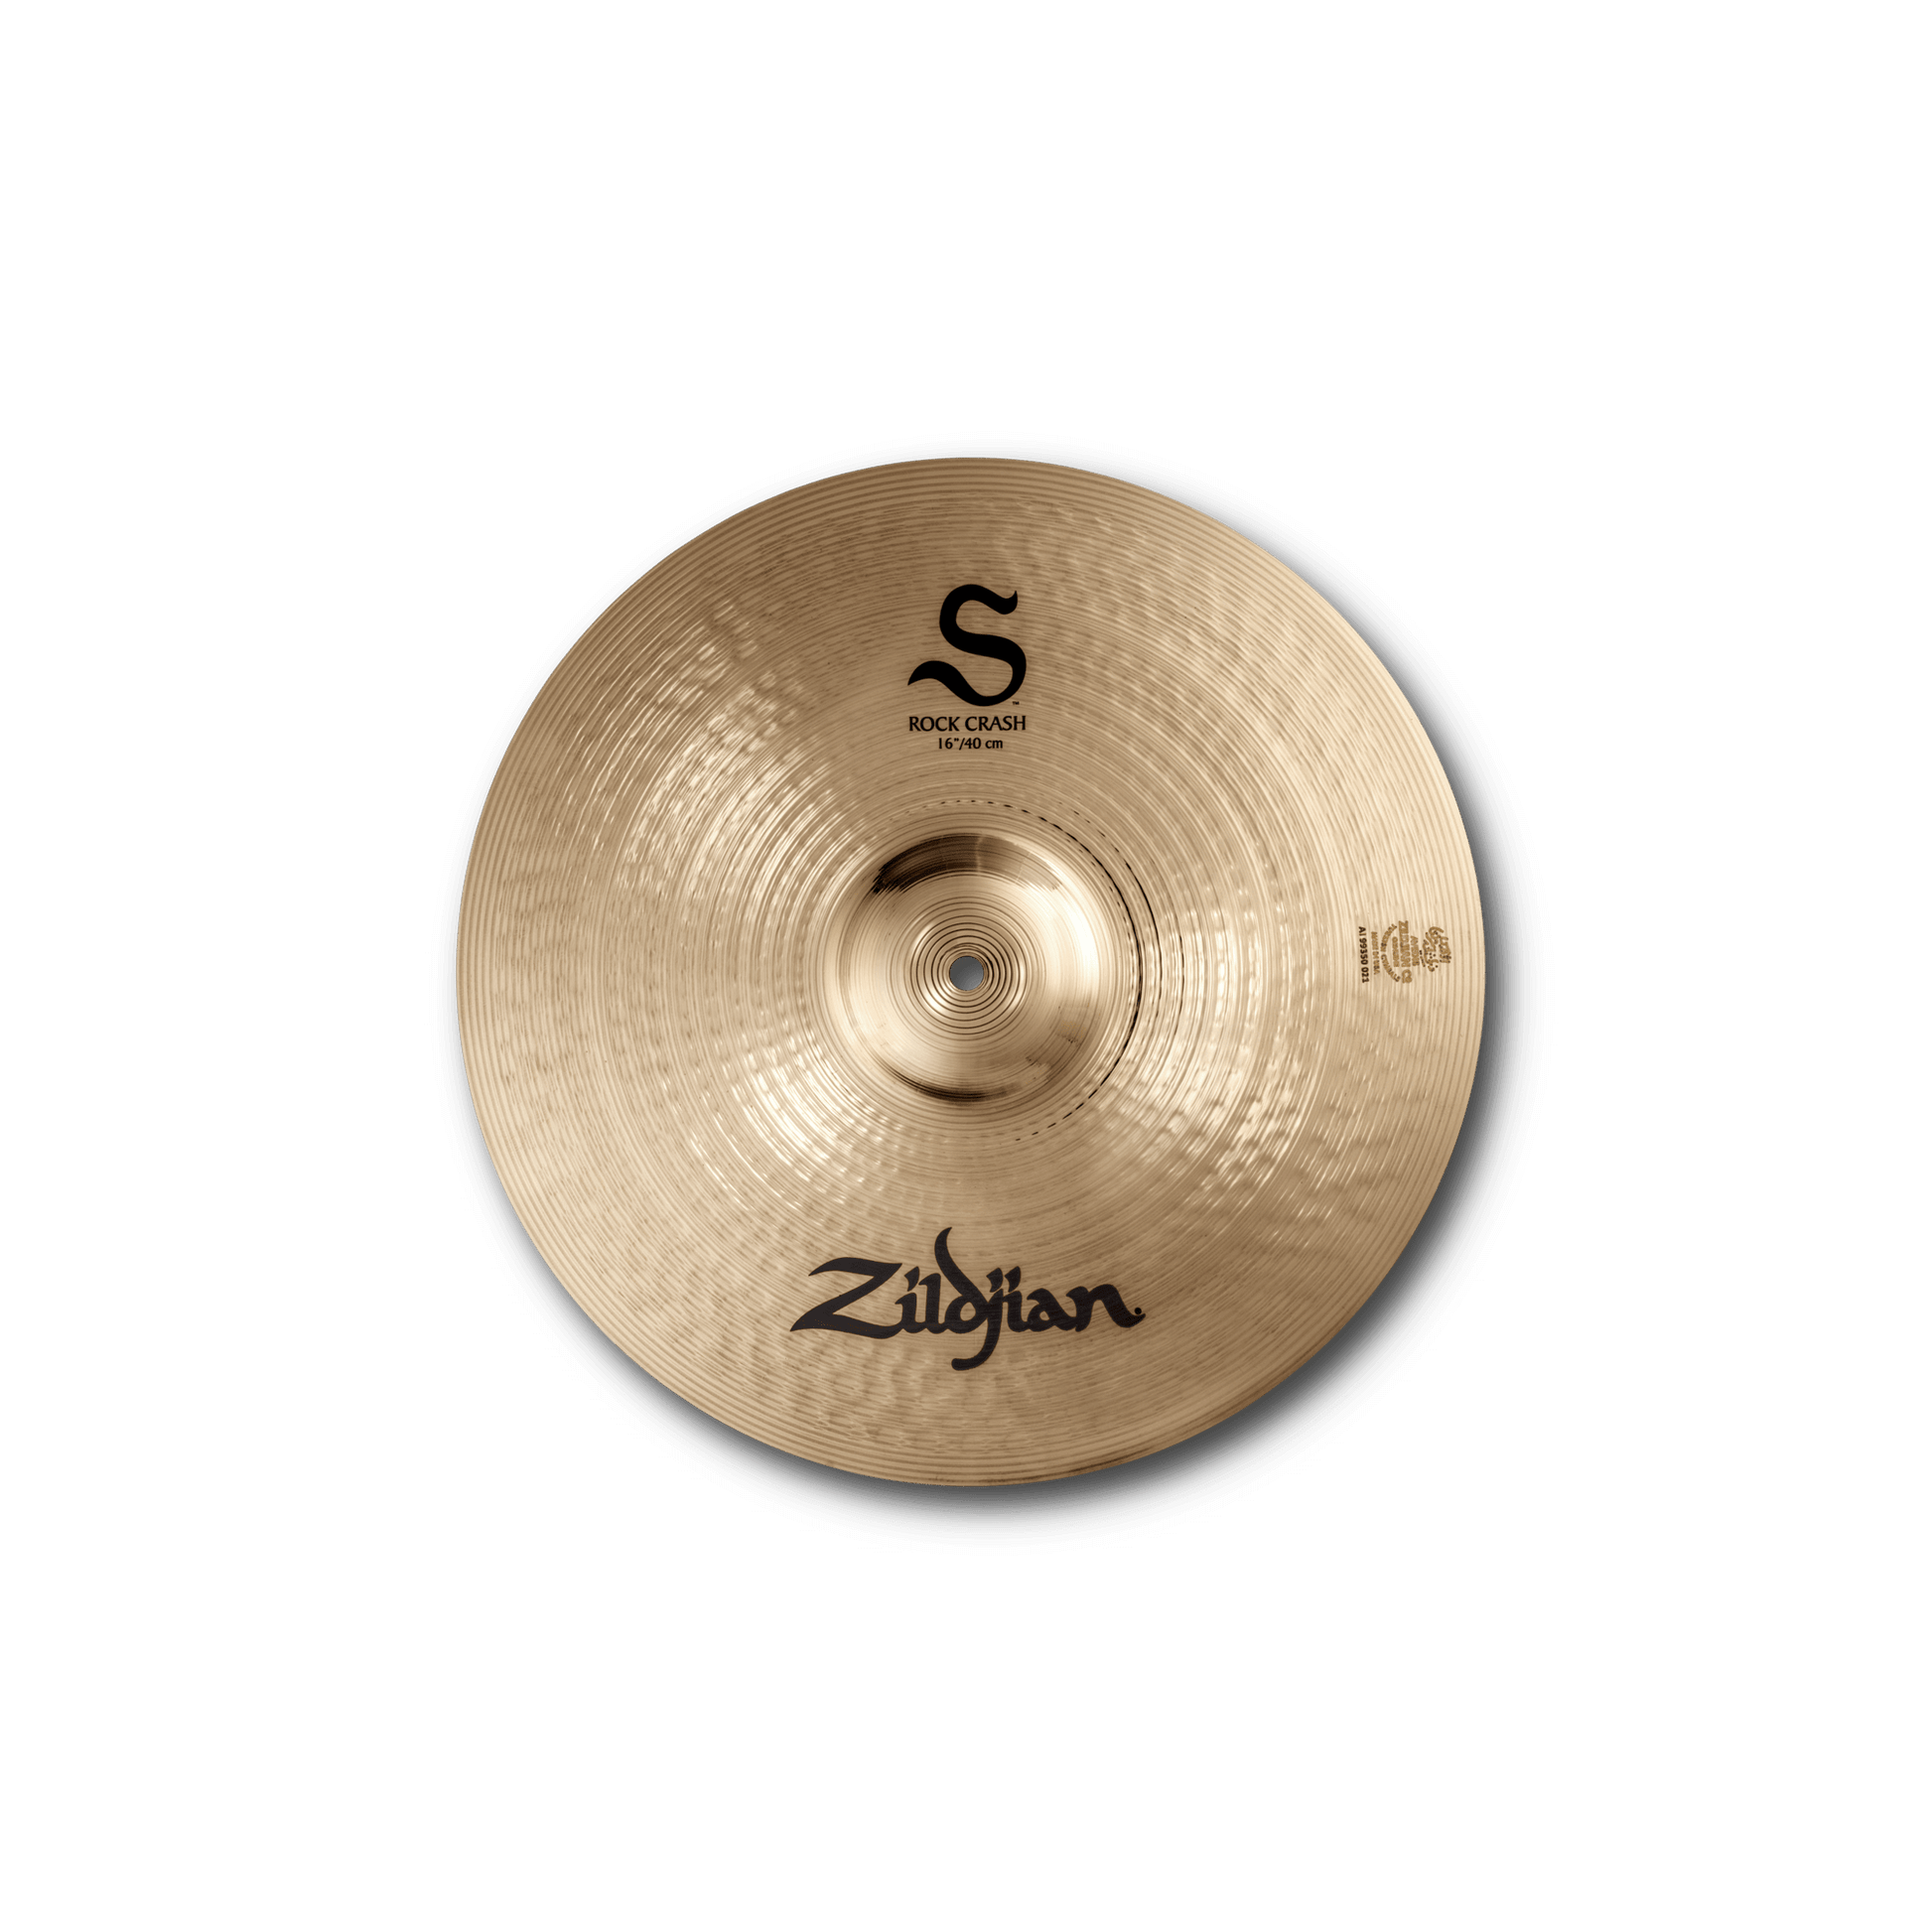 S Rock Crashes – Zildjian